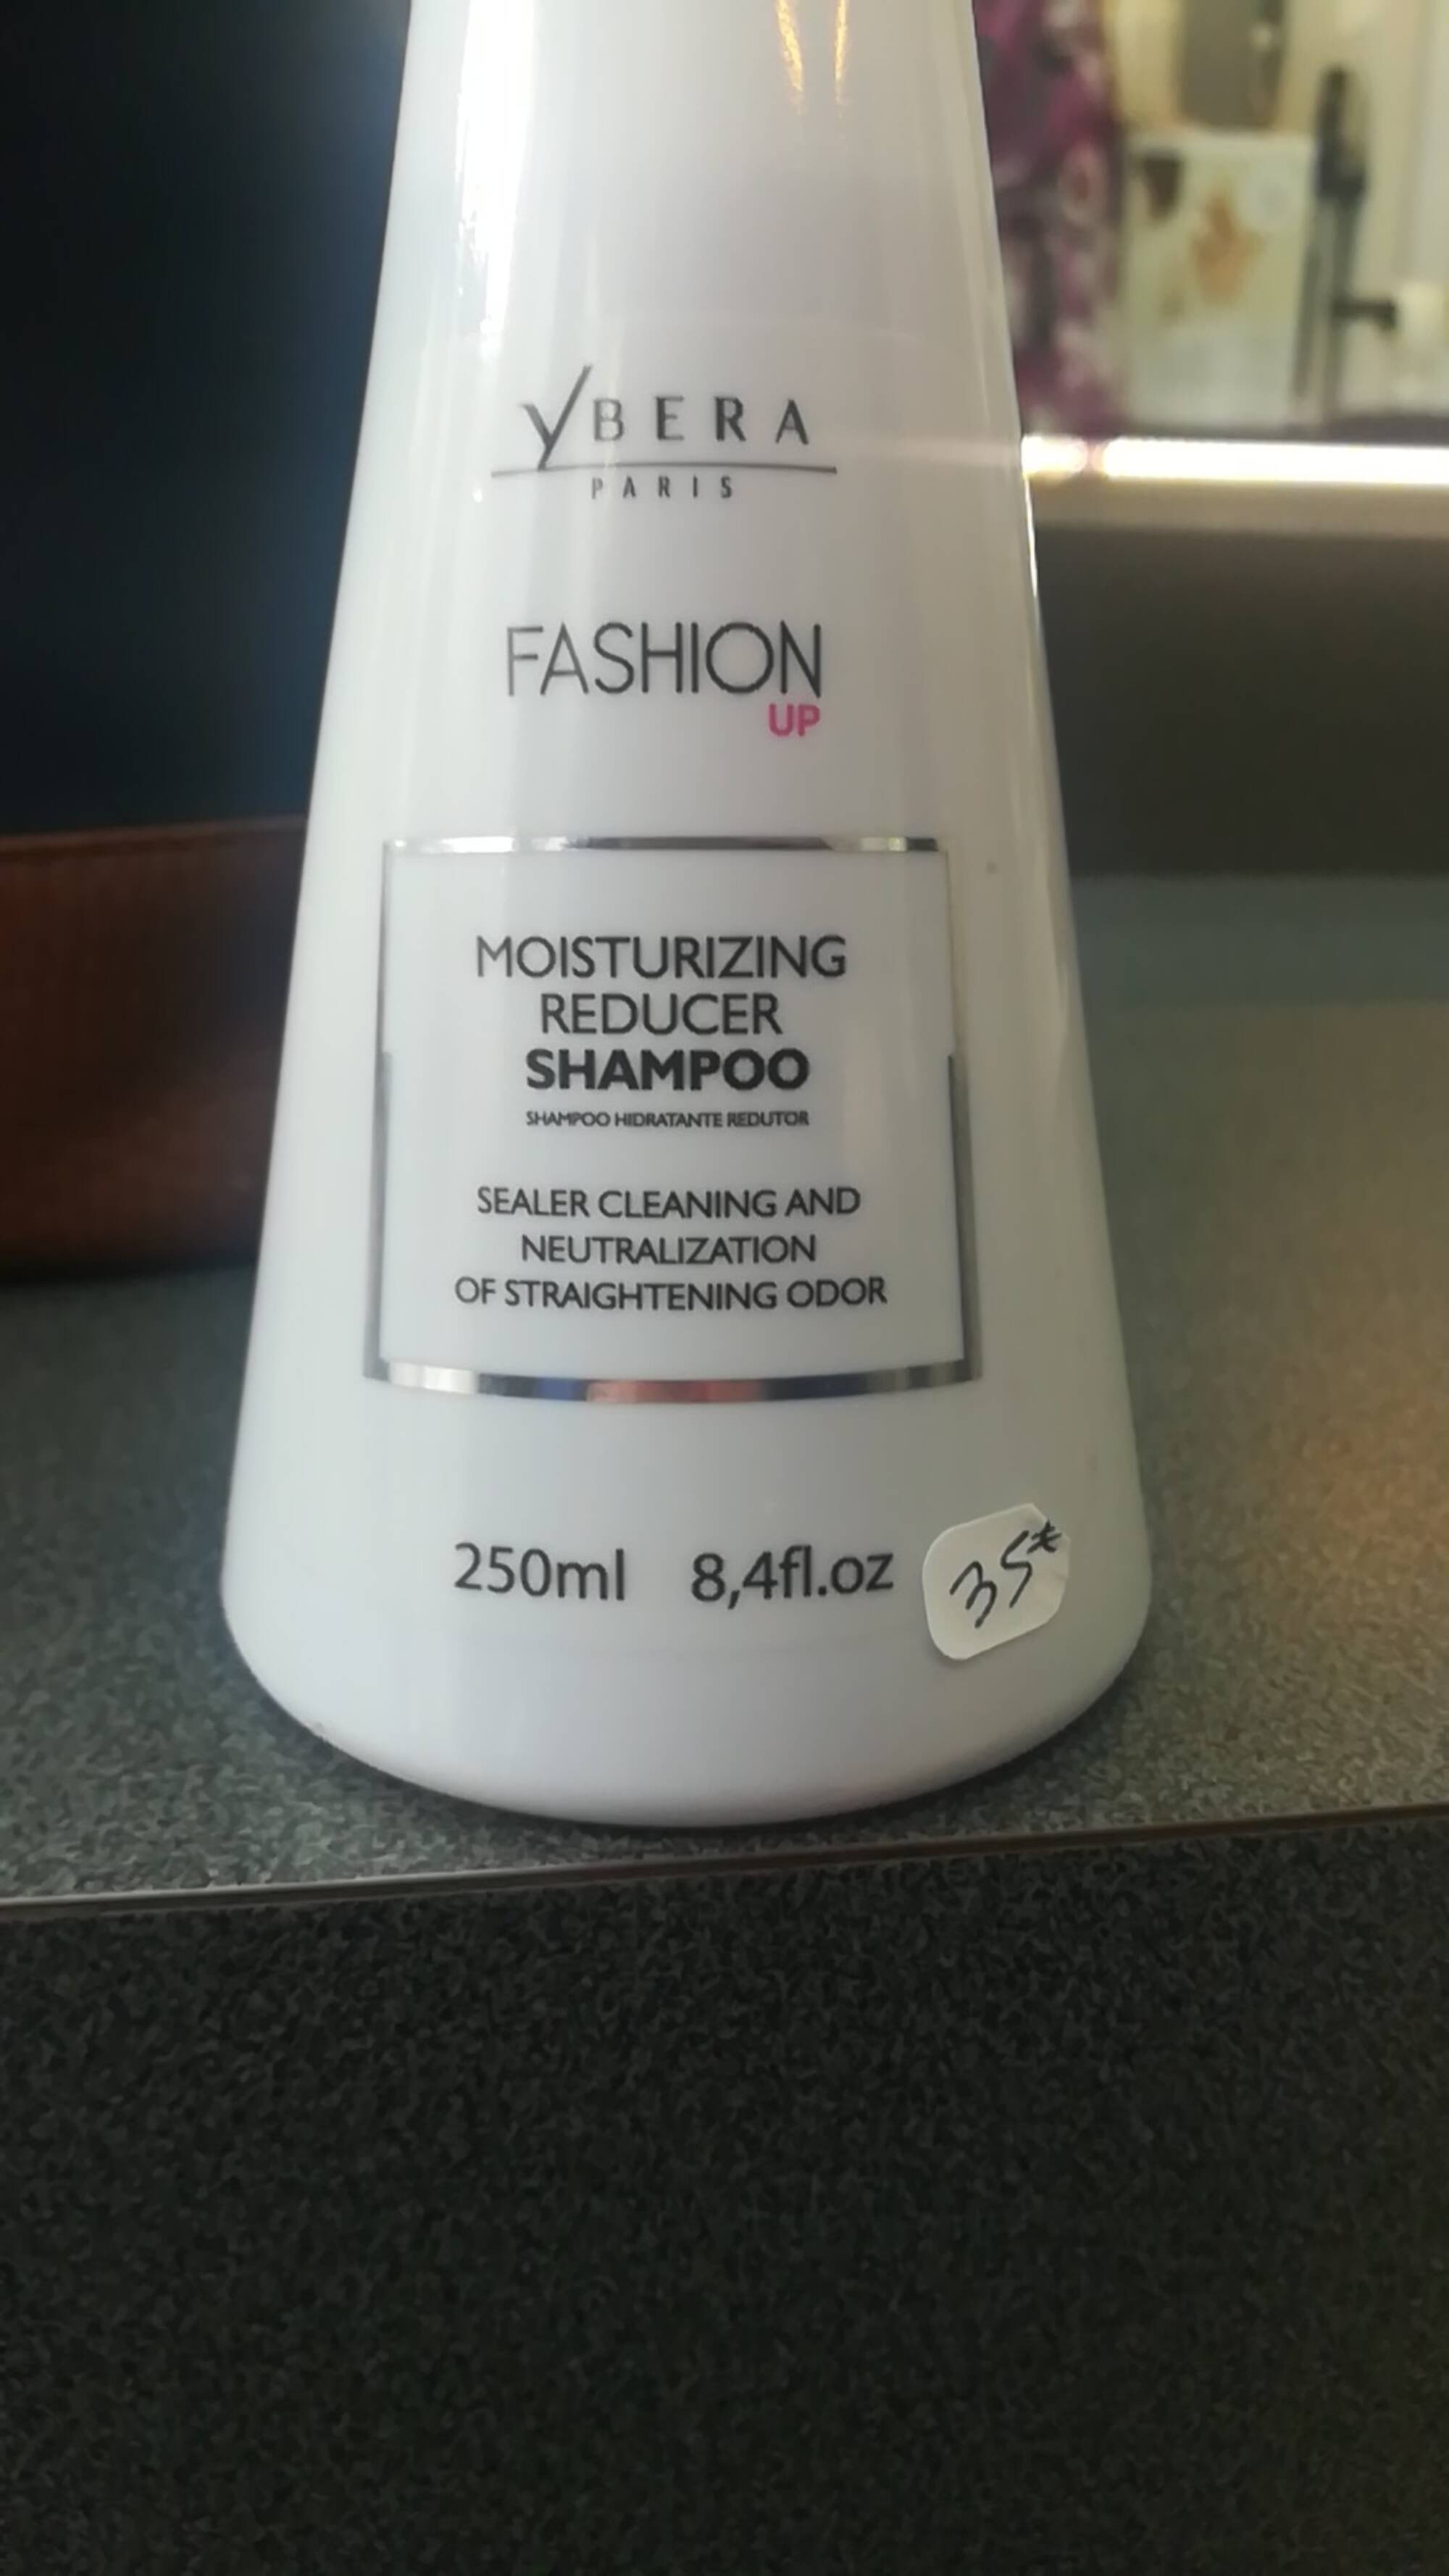 YBERA - Fashion Up - Moisturizing reducer shampoo